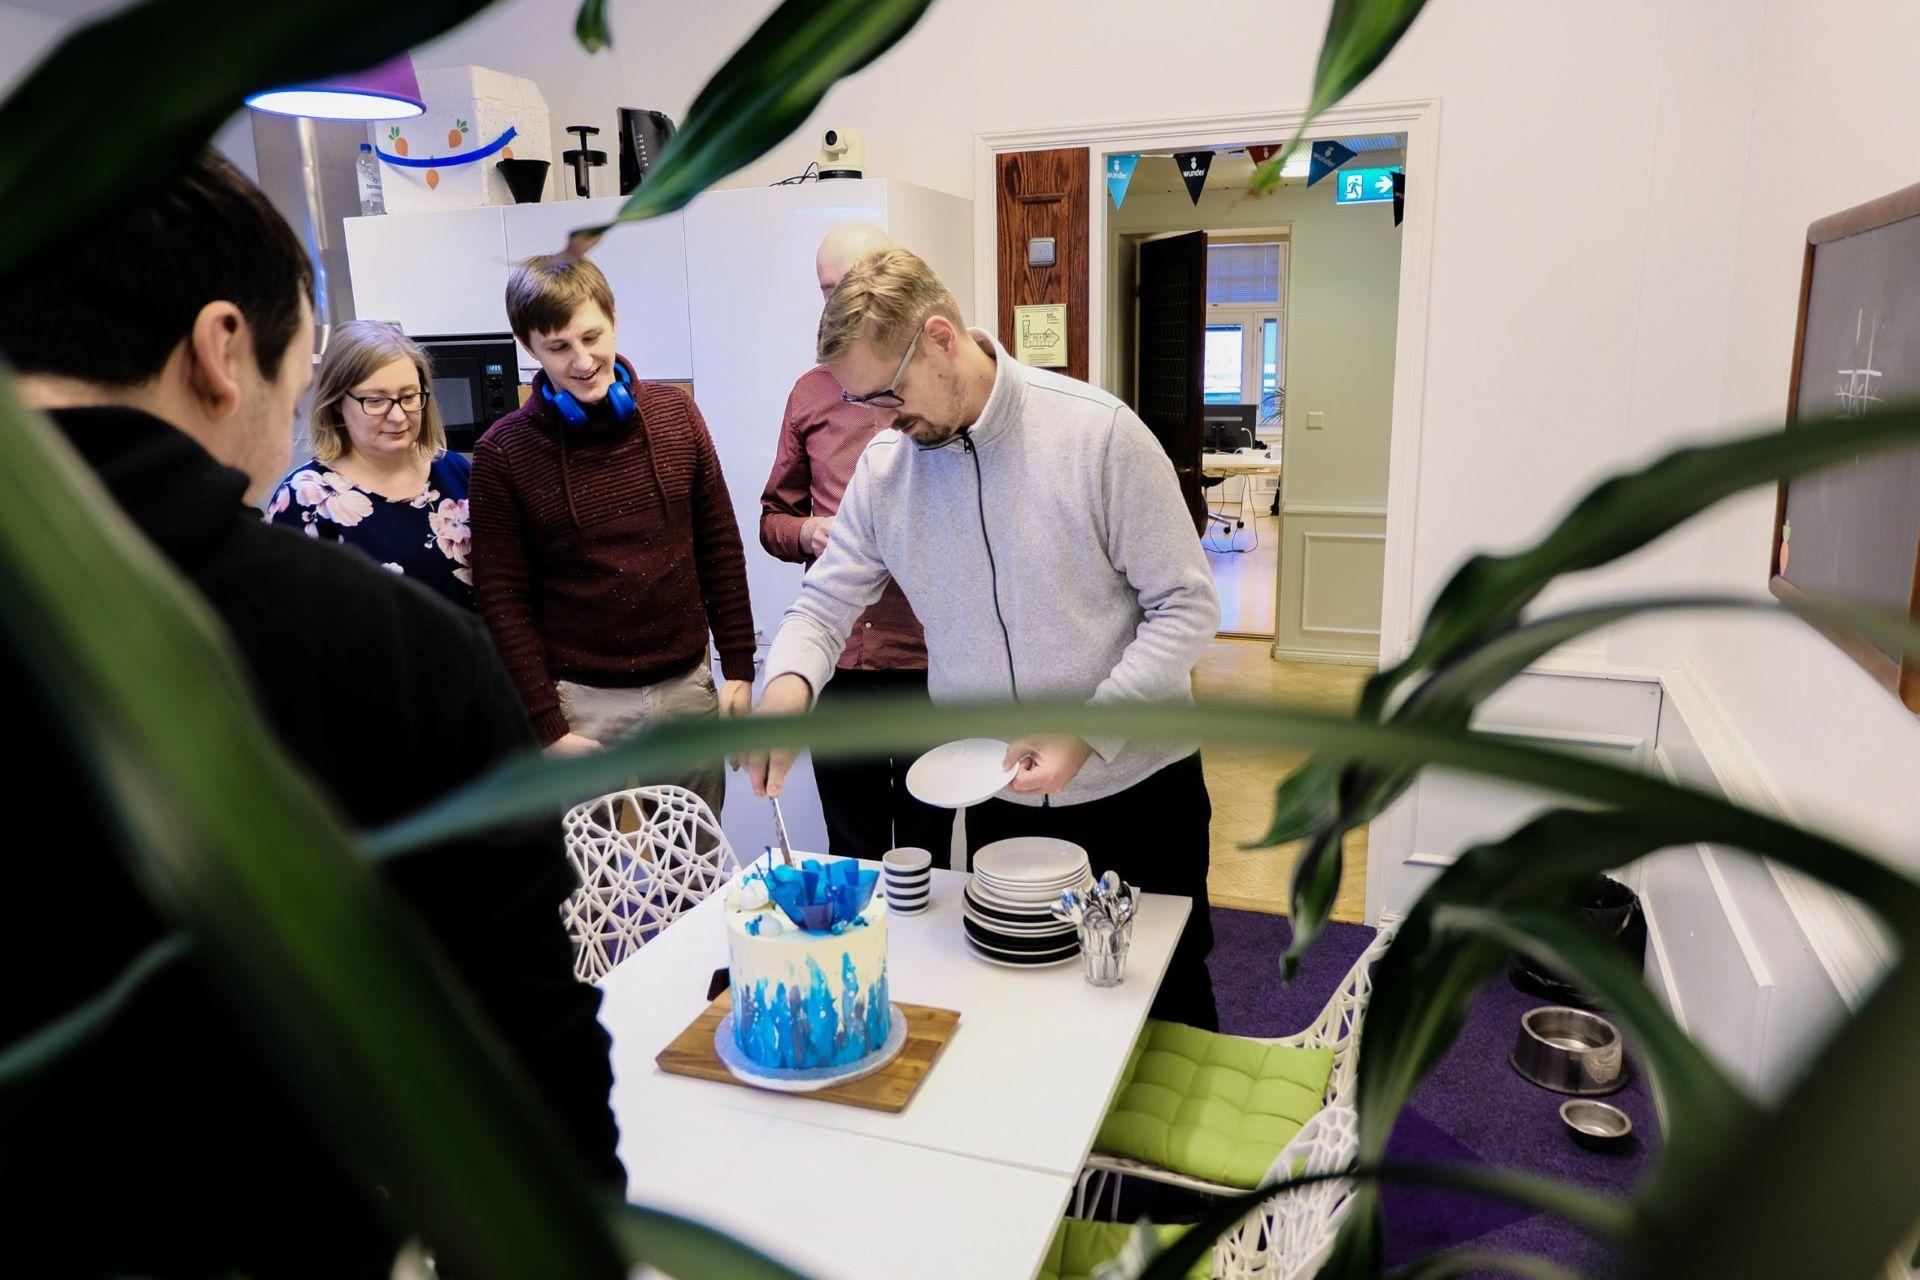 Wunderers around a Drupal-themed cake at Wunder Helsinki office's kitchen.